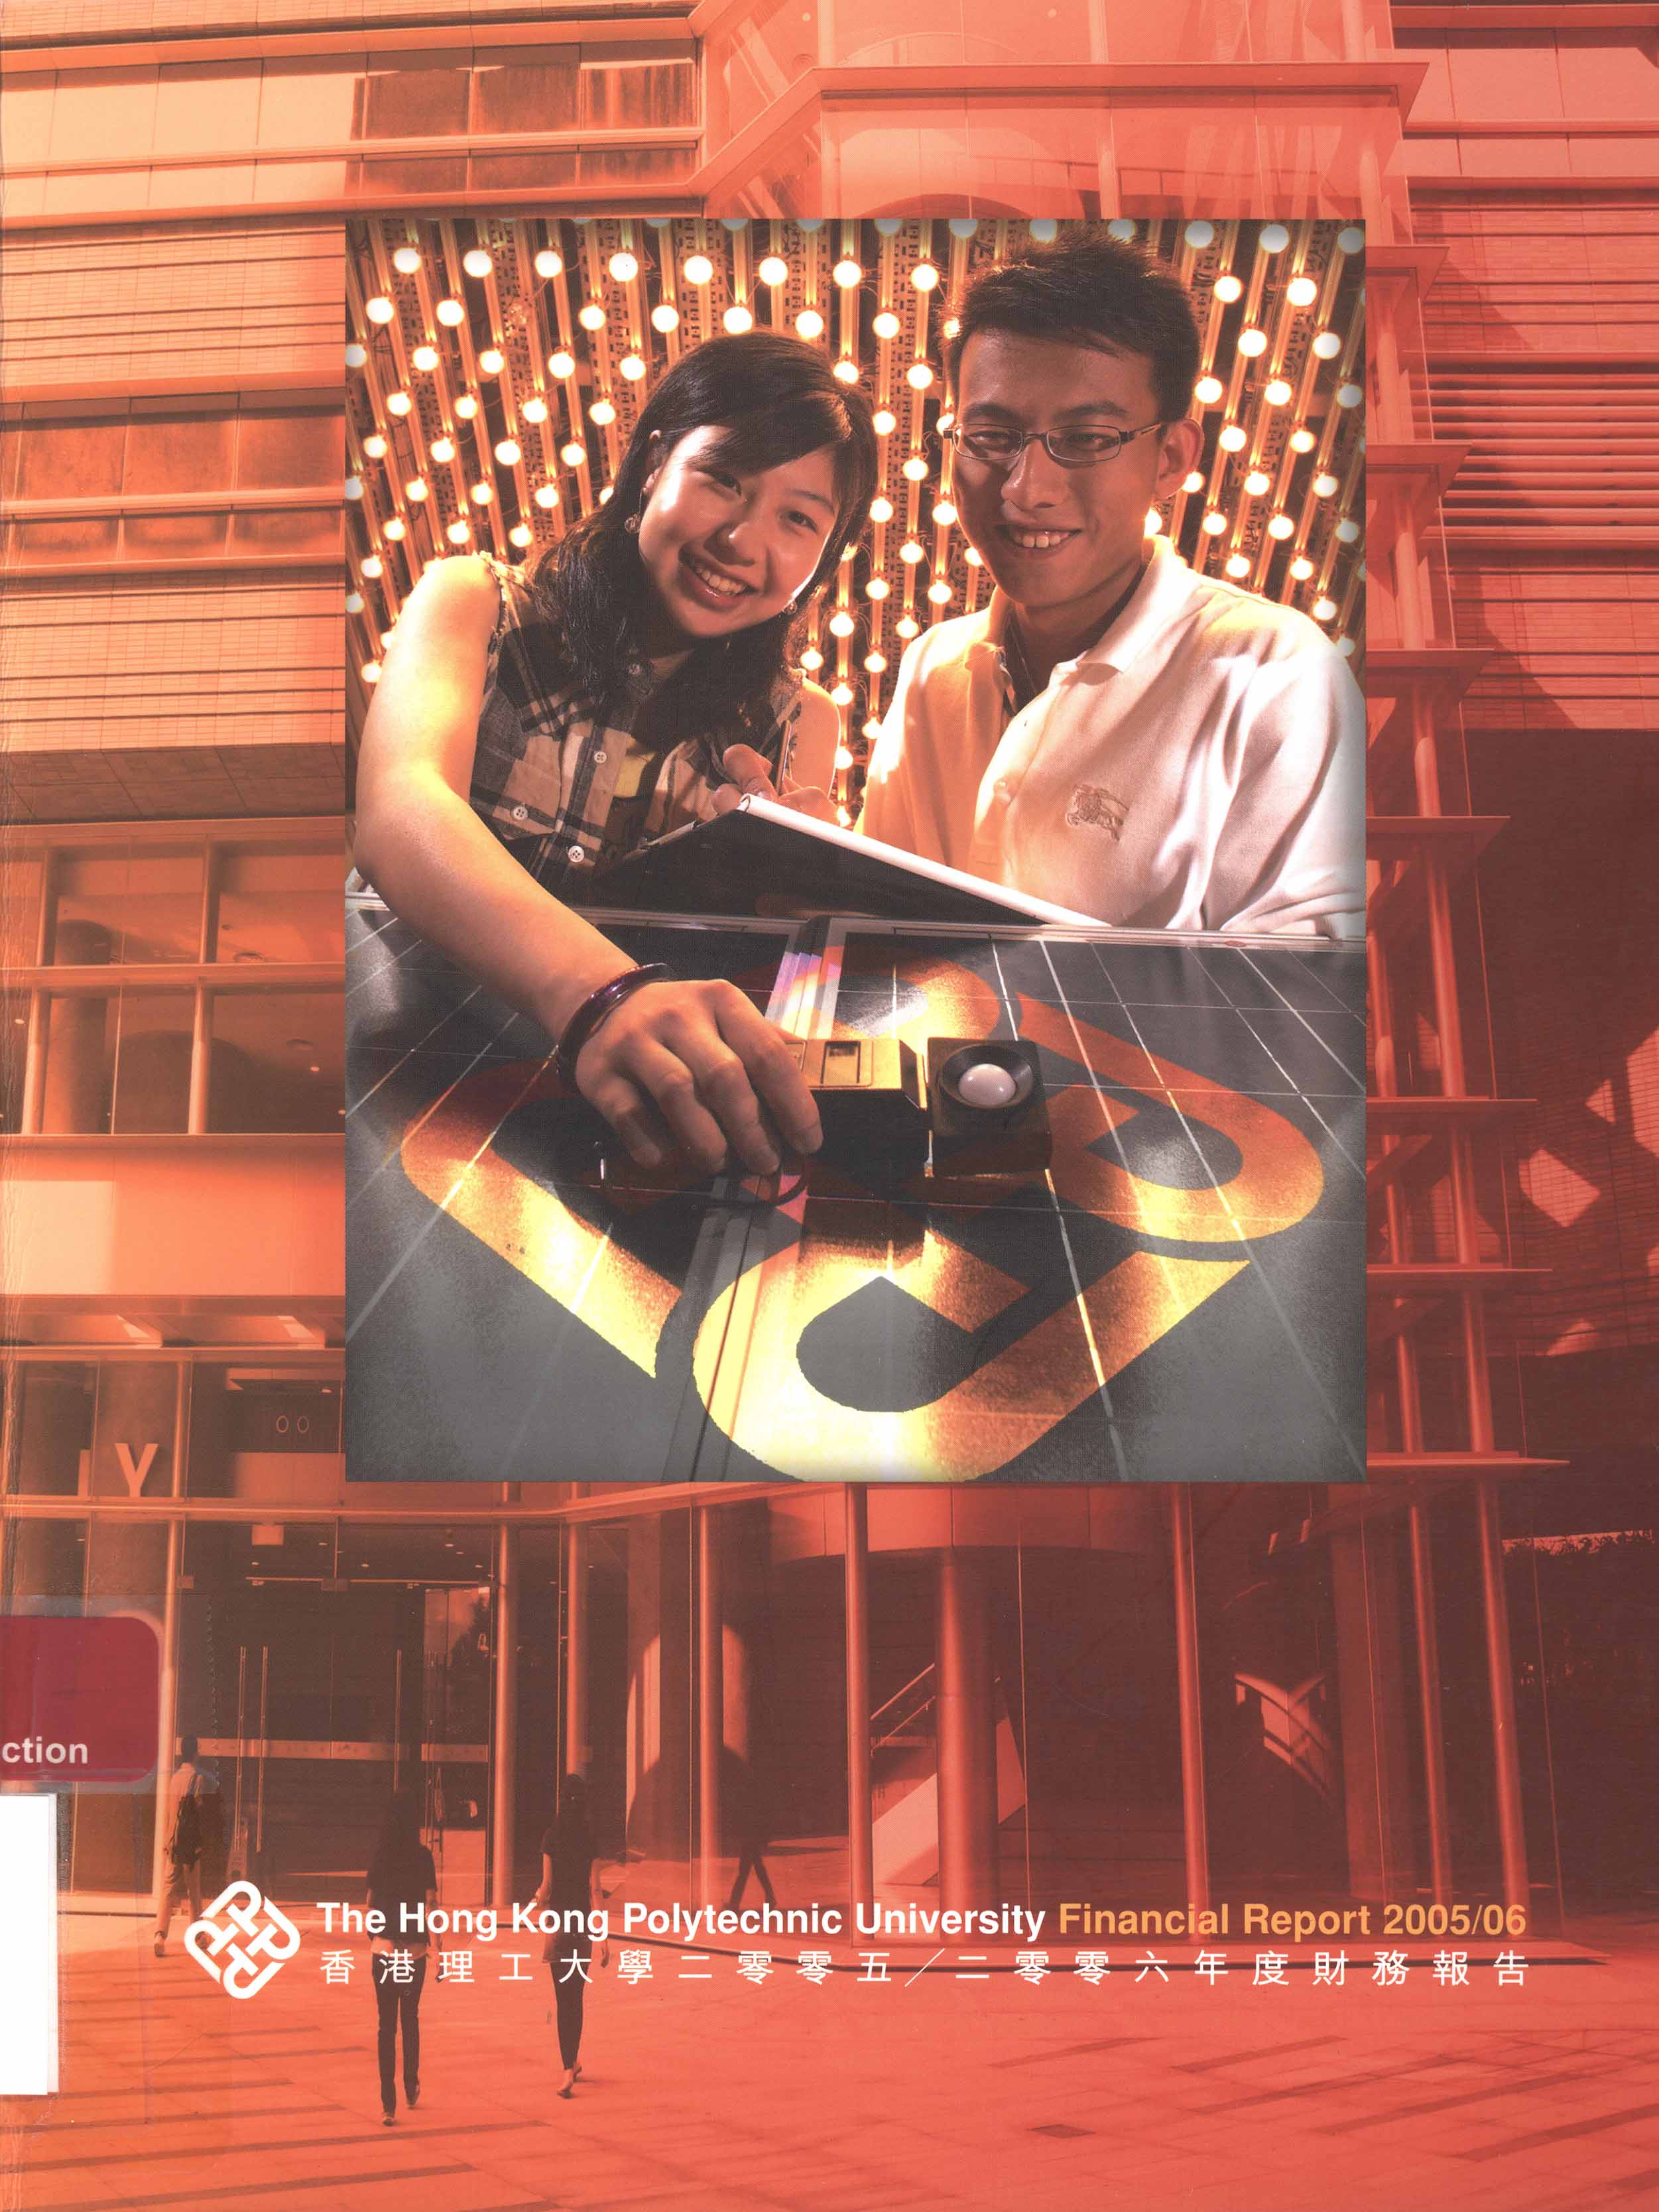 Hong Kong Polytechnic University Financial report 2005/06